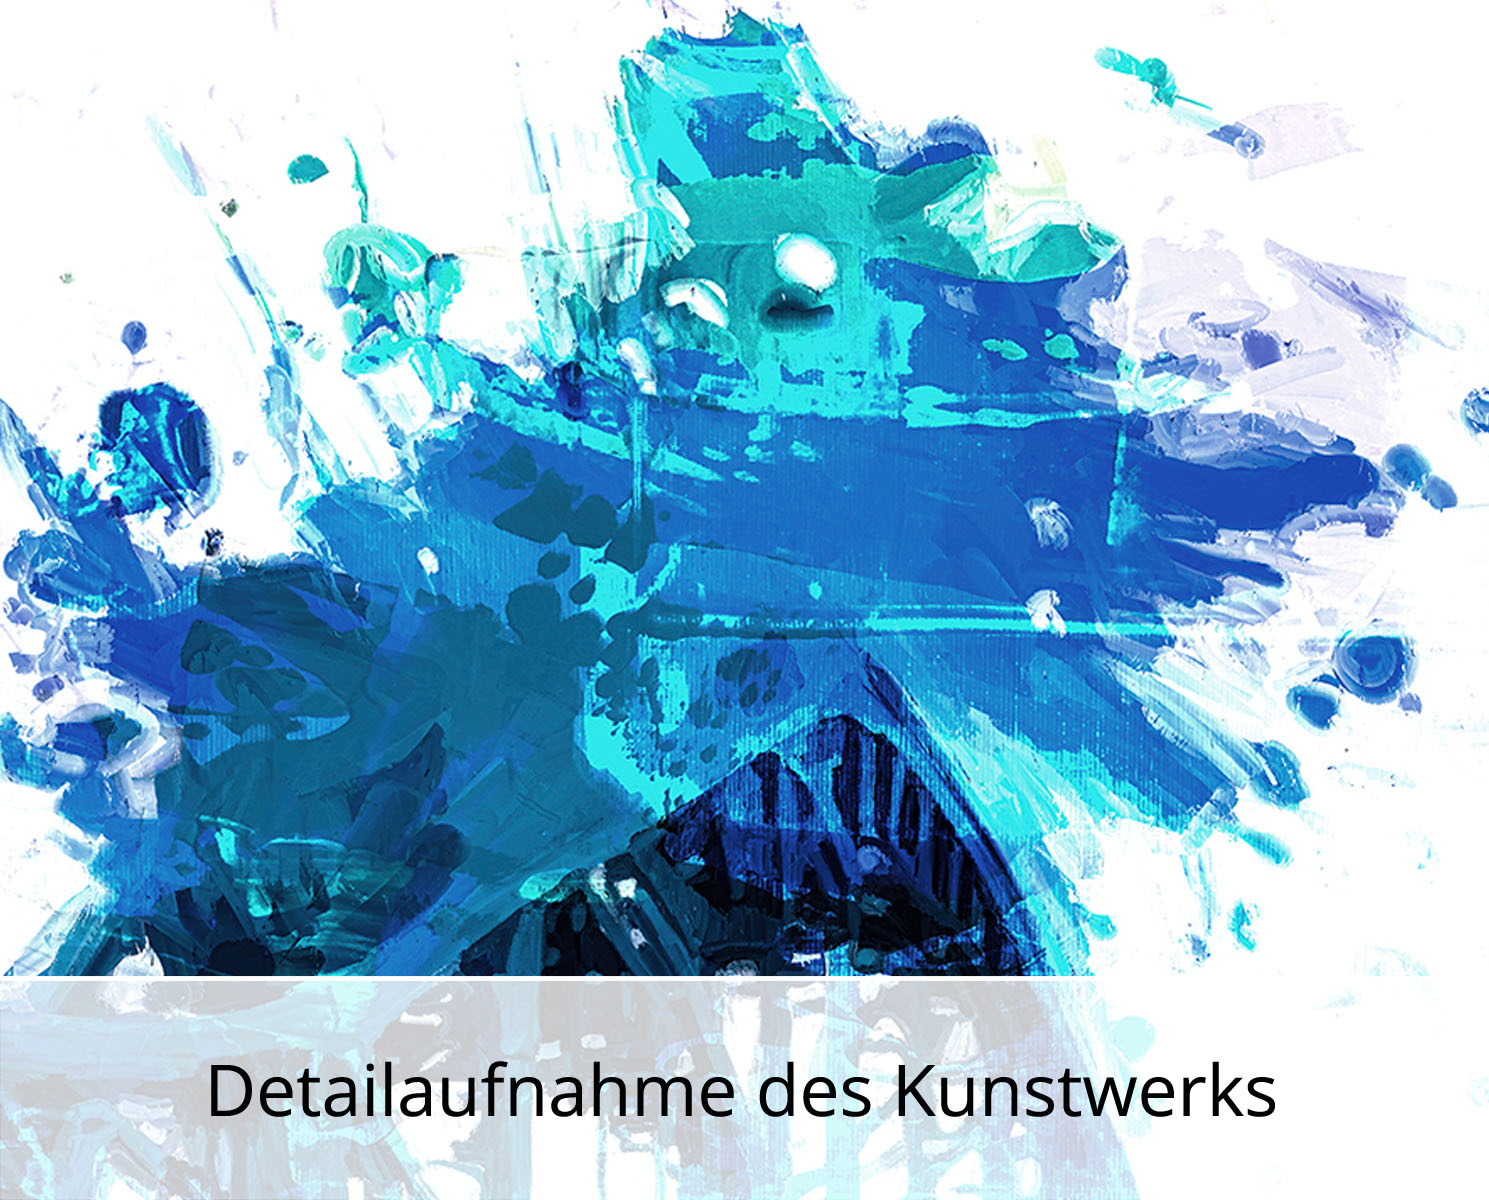 Moderne Pop Art: Das blaue Wunder, H. Mühlbauer-Gardemin, Original/serielles Unikat